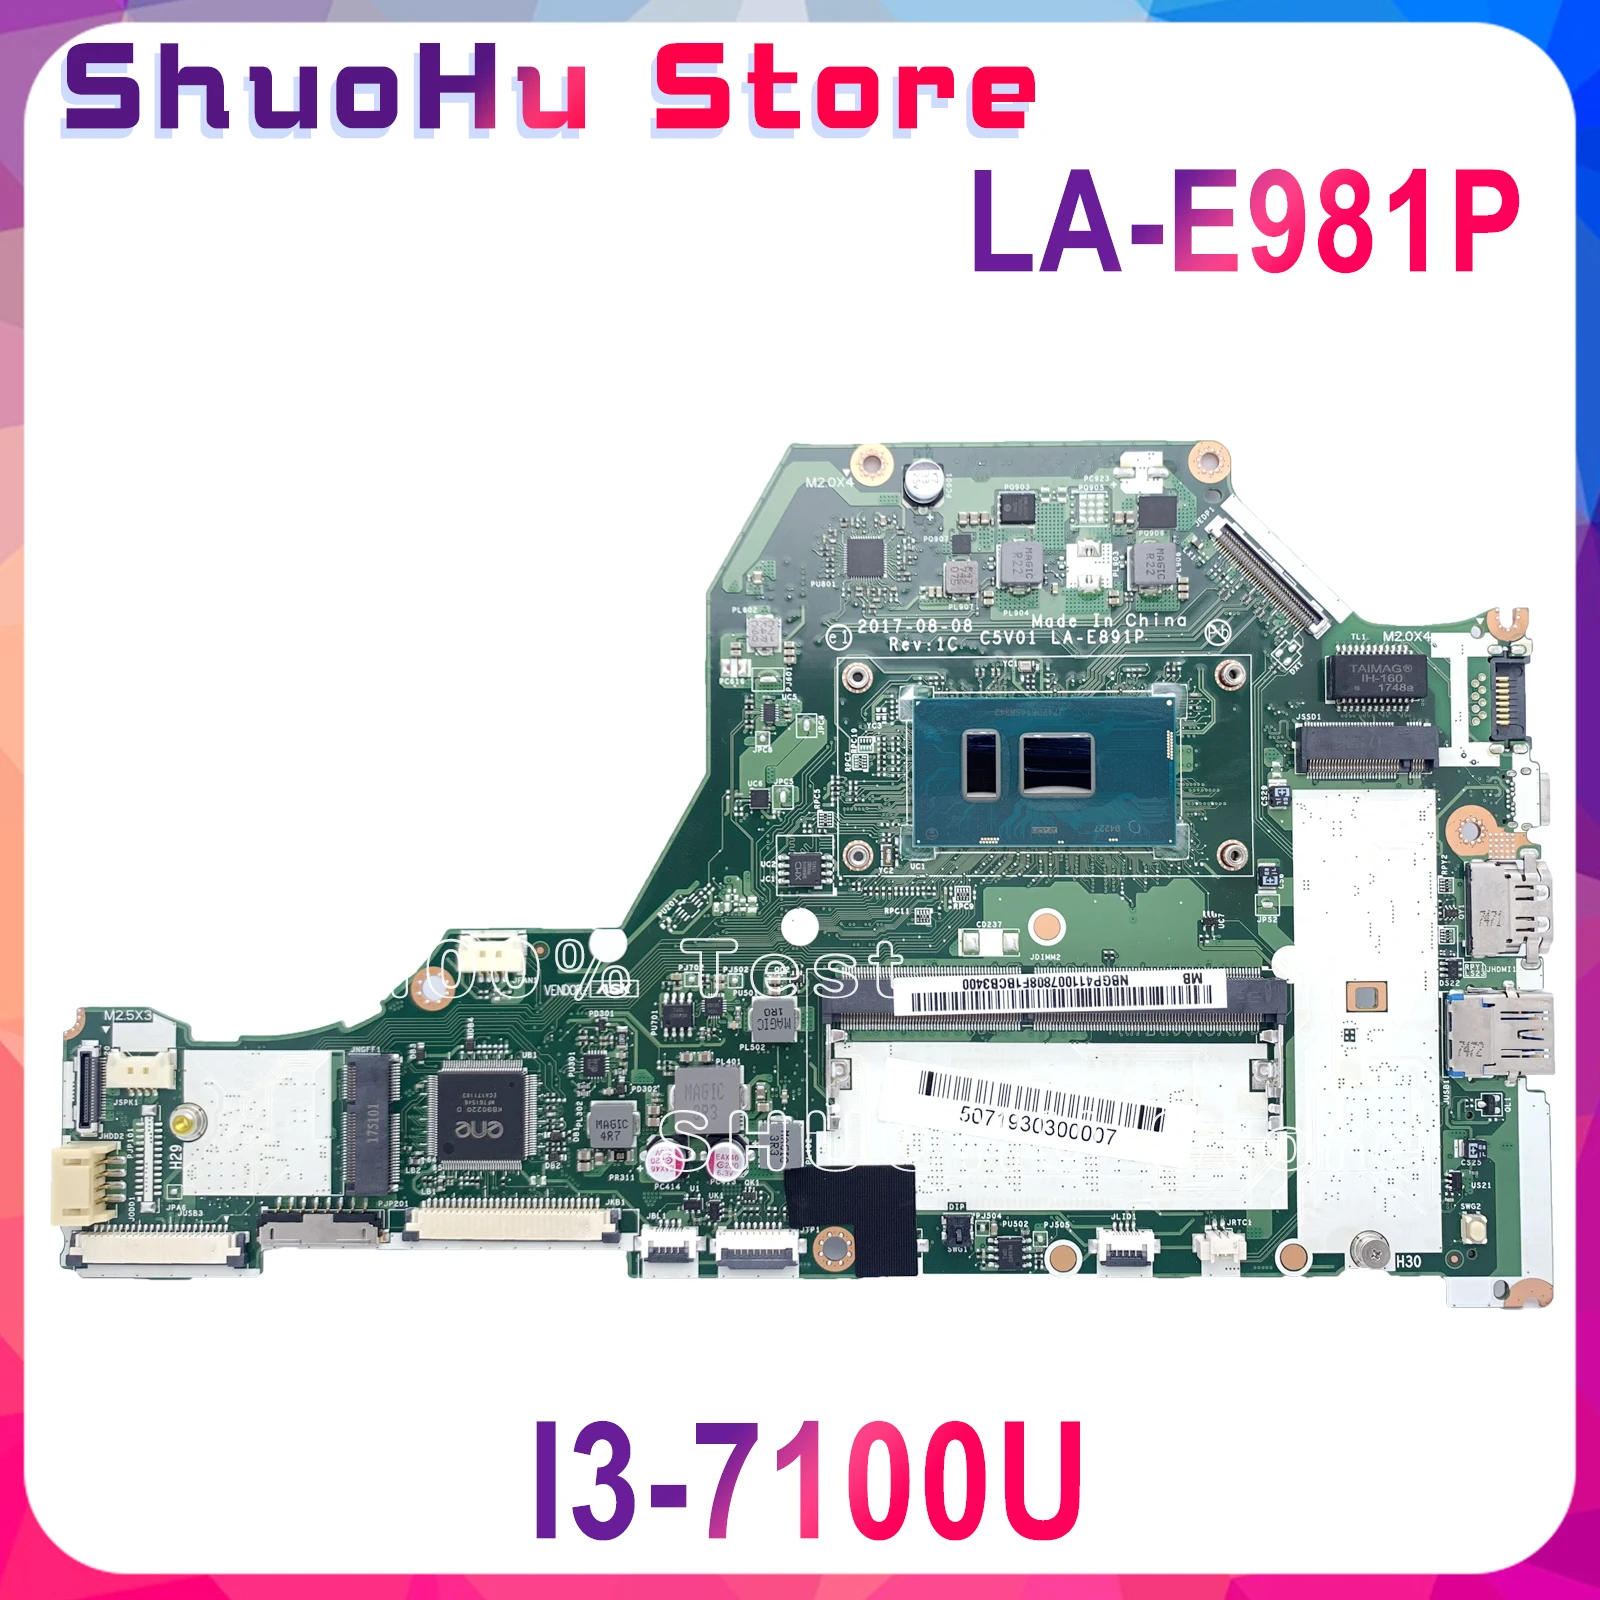 

A515-51 Maintherboard Mor Acer Aspire A615-51G A515-51G A315-51G A517-51G Laptop Motherboard C5V01 LA-E891P I3-7100U 100% Tested